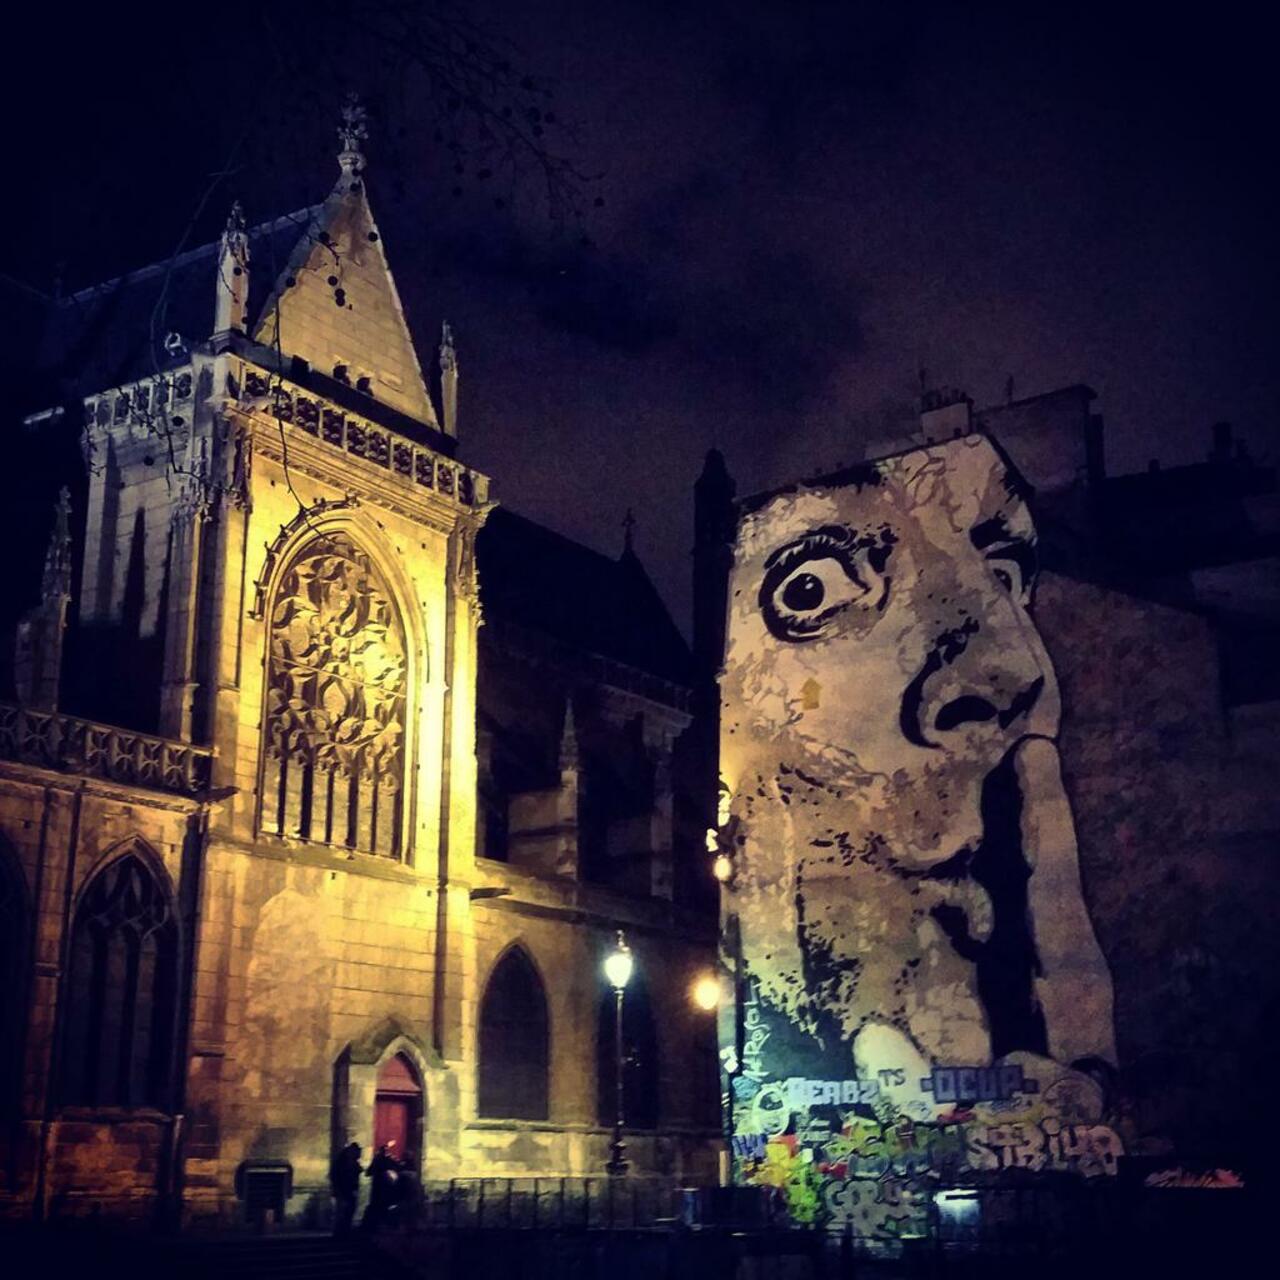 RT @kibuchu: #streetart #arturbain #urbanart #graffiti #art #city #paris #chatelet #rue #peinture #artderue #streetlife http://t.co/1xvBC89veb